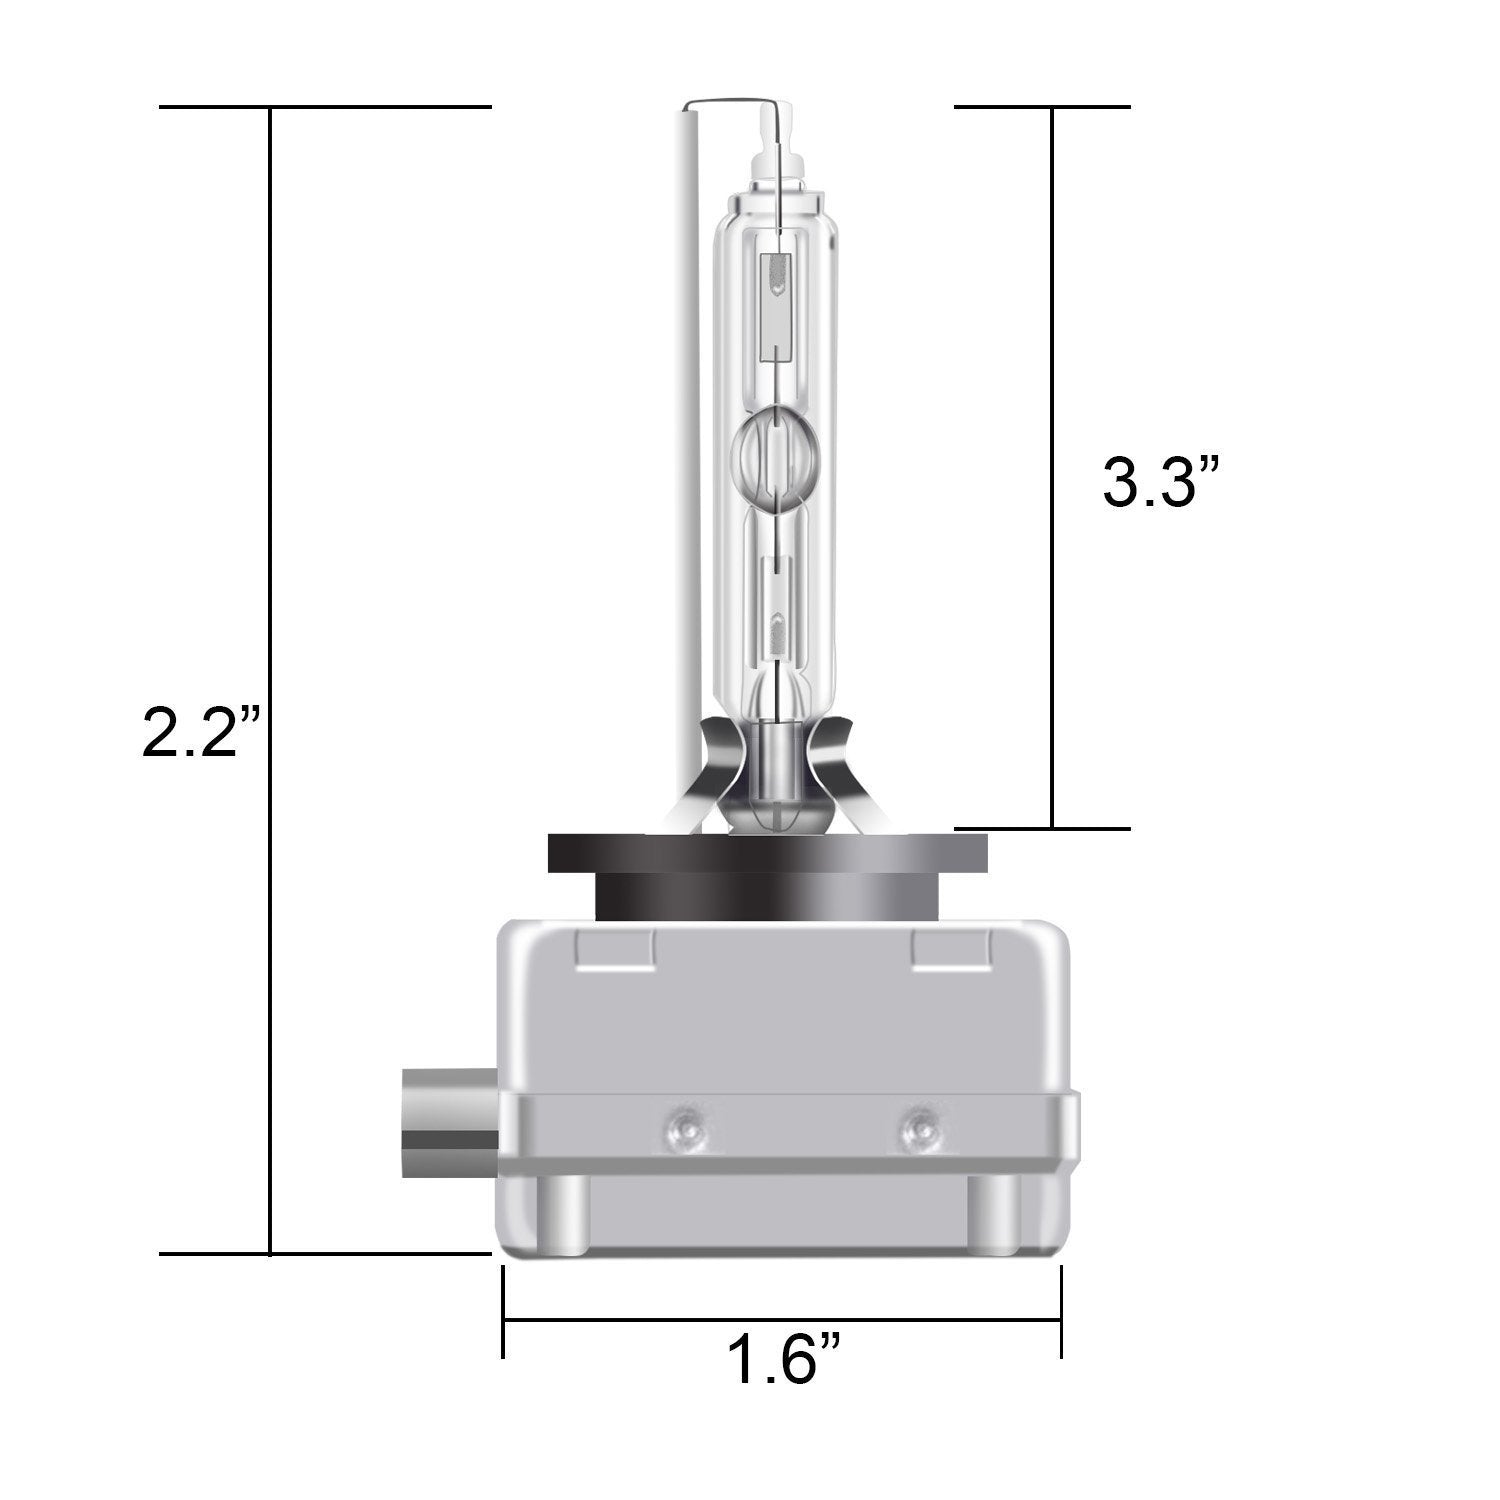 D3S/R Xenon HID Headlight Bulb - Installation Guide 